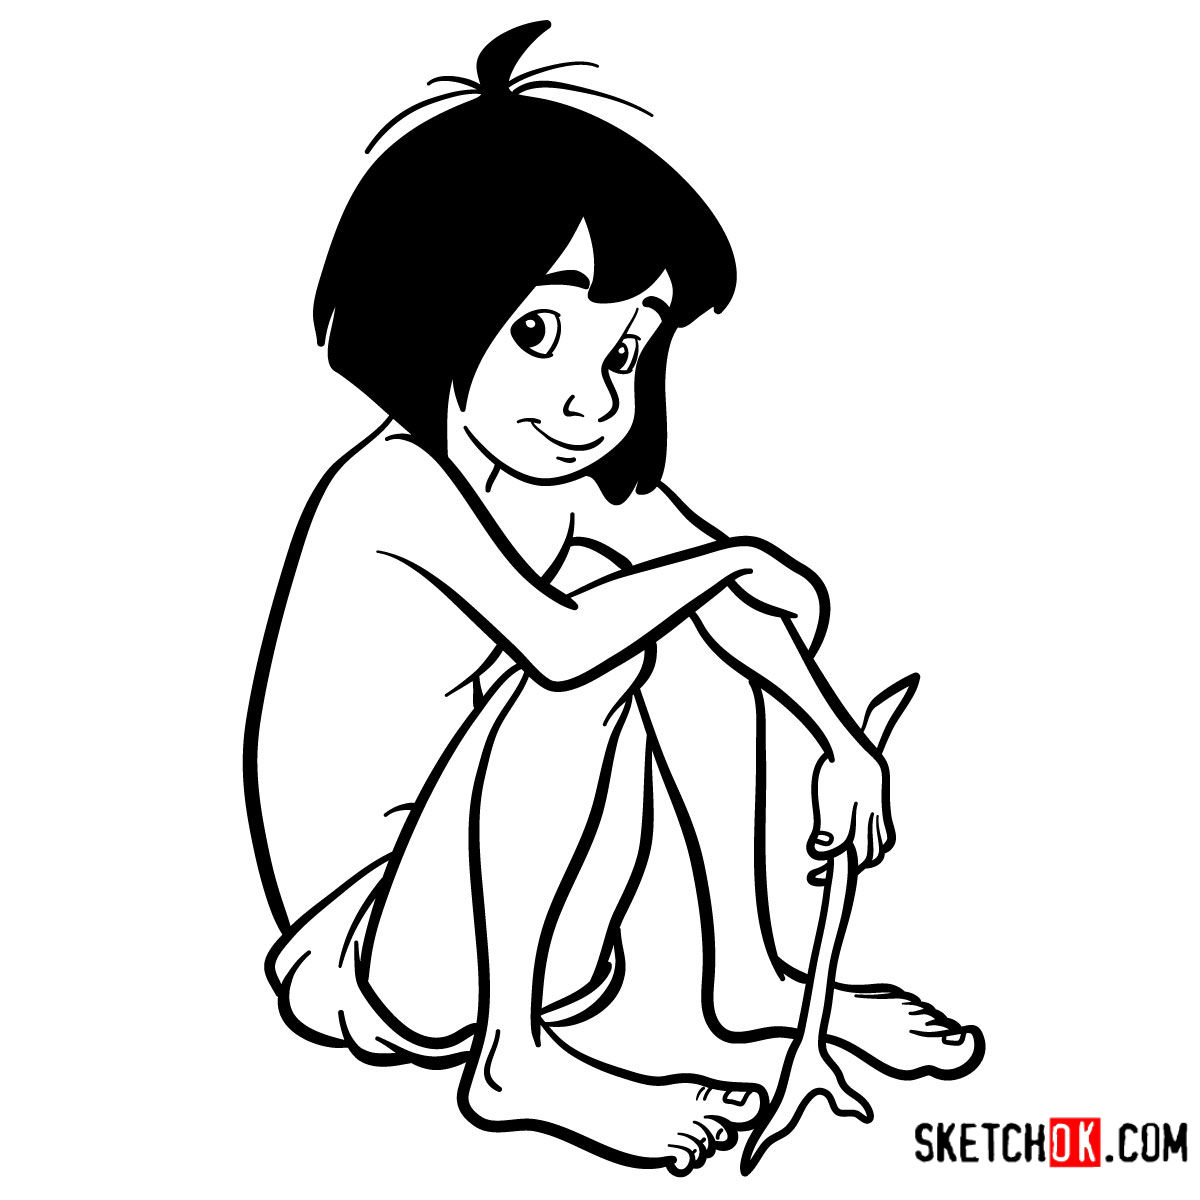 How to draw Mowgli | The Jungle Book - step 14